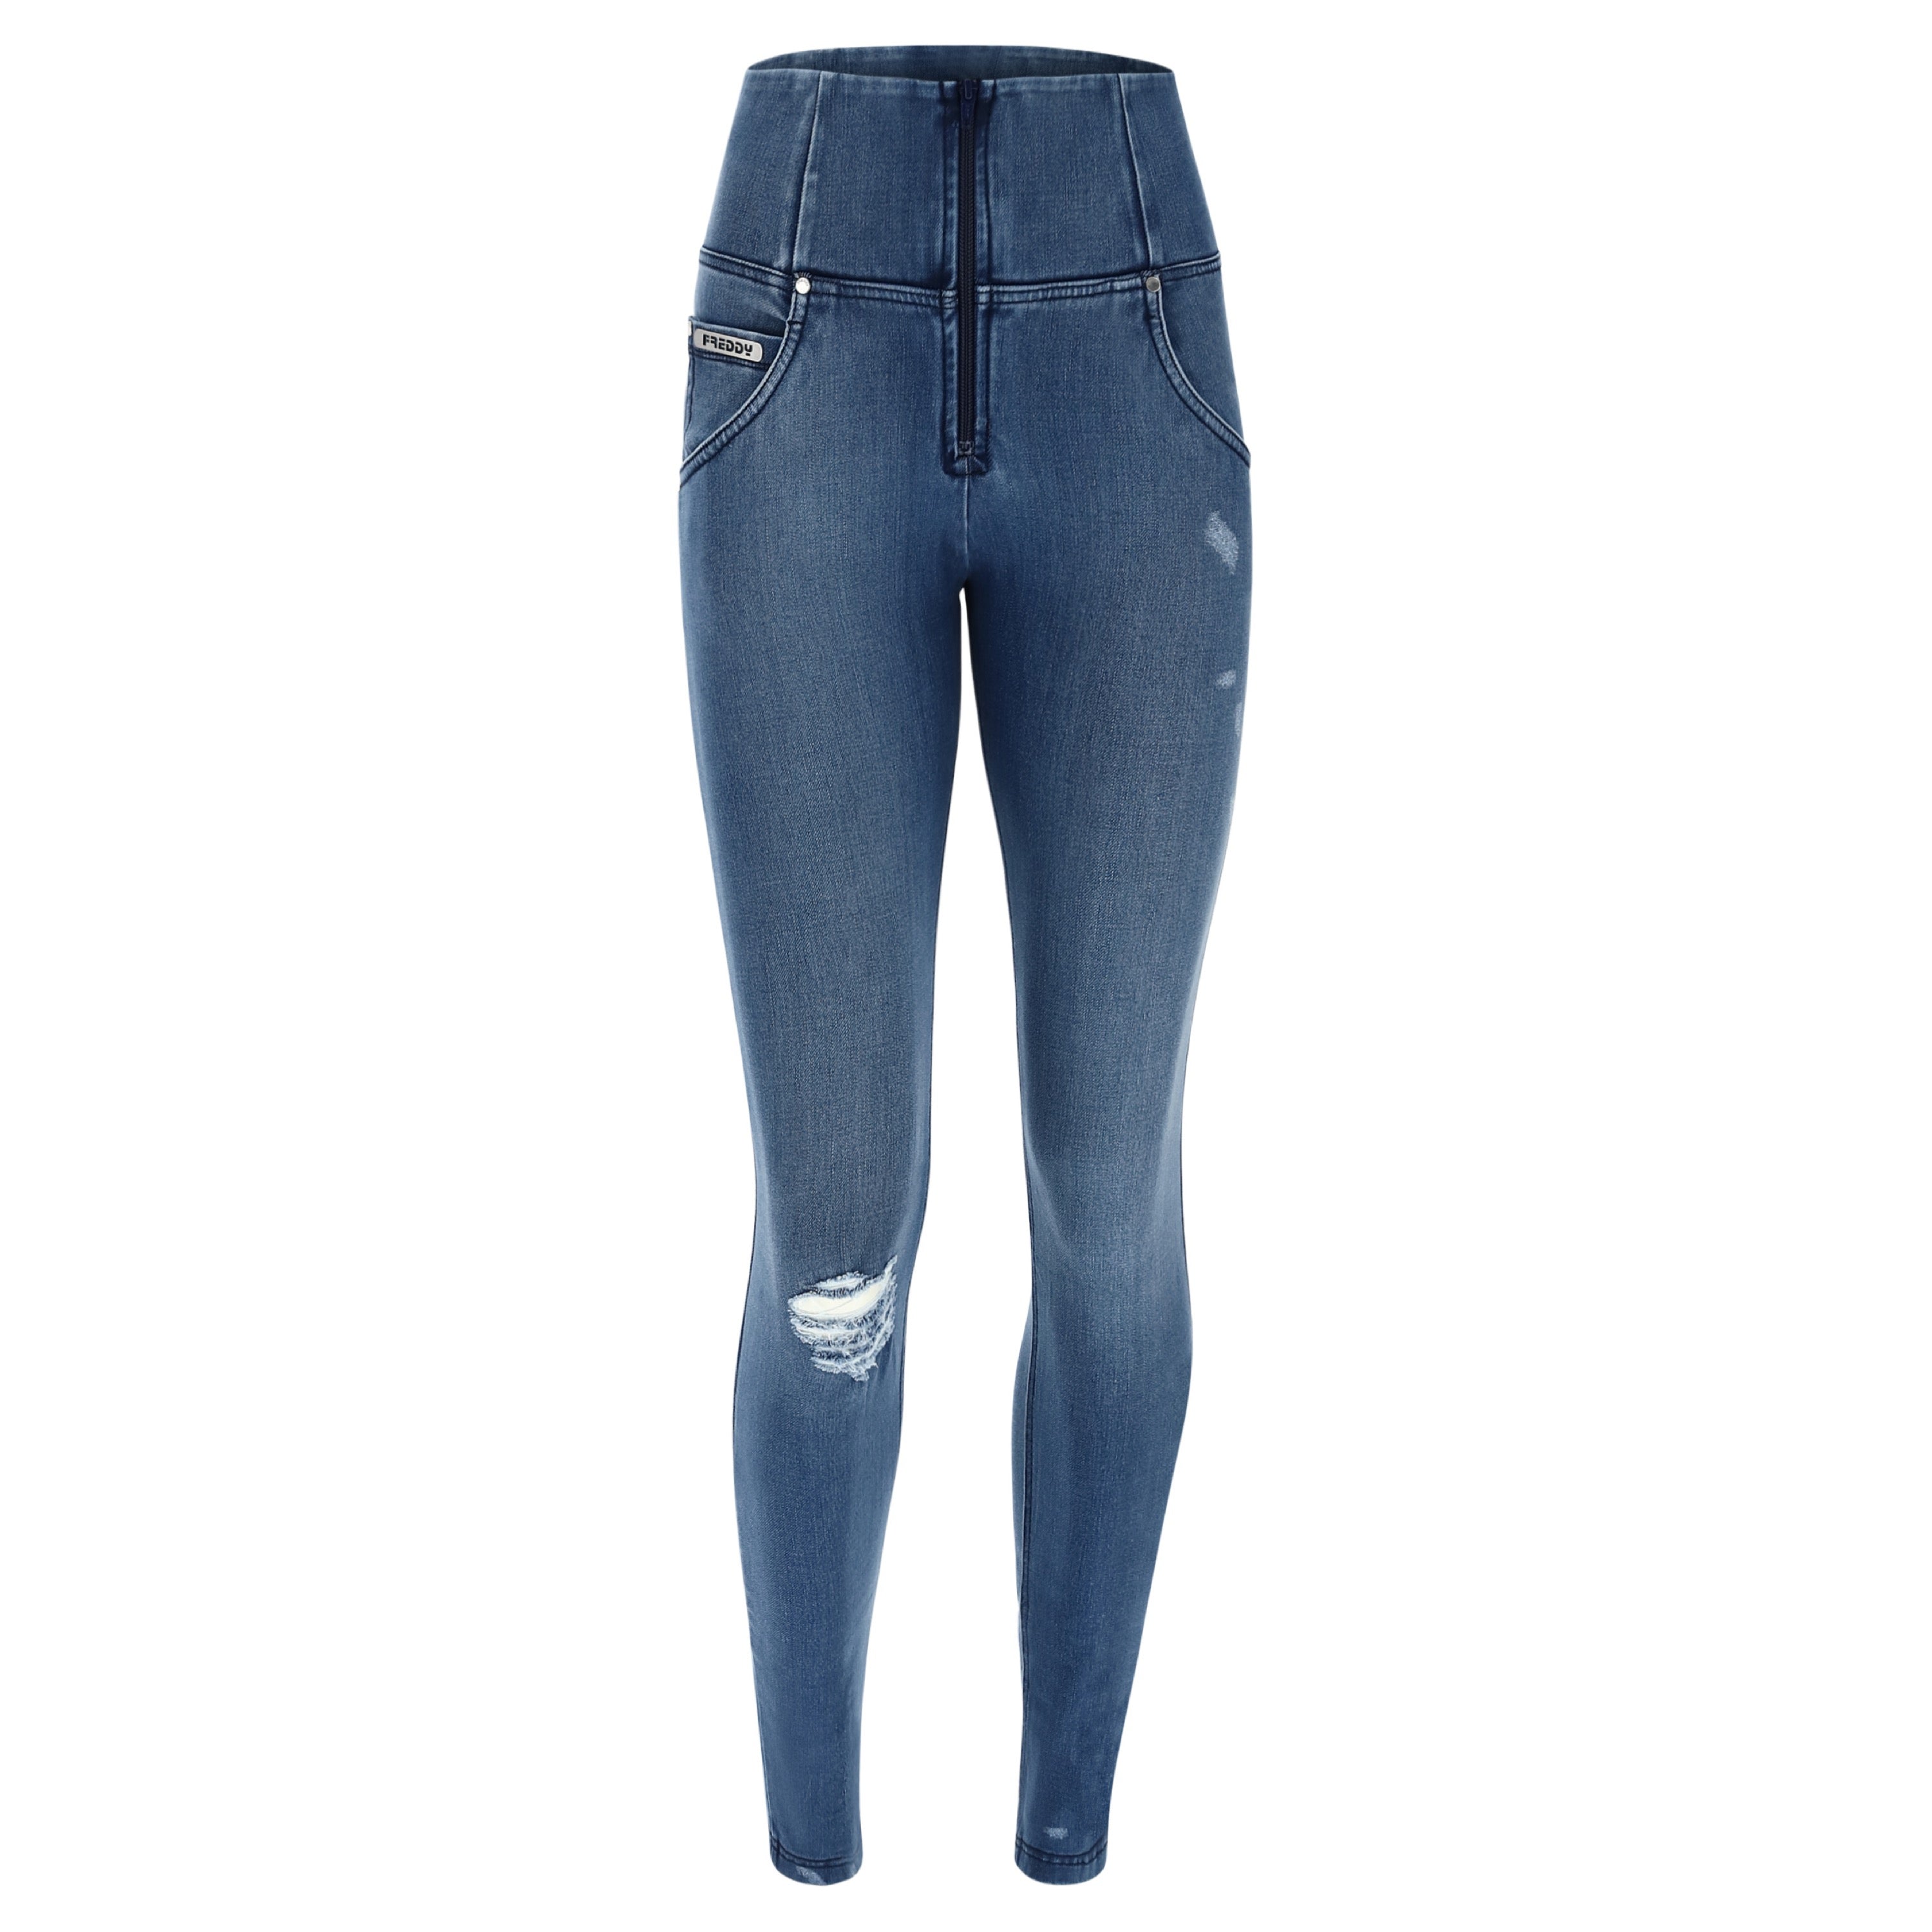 freddy jeans broek pants woven denim fitting high waist zipper rits hoge taille scheurtjes ripped blauw